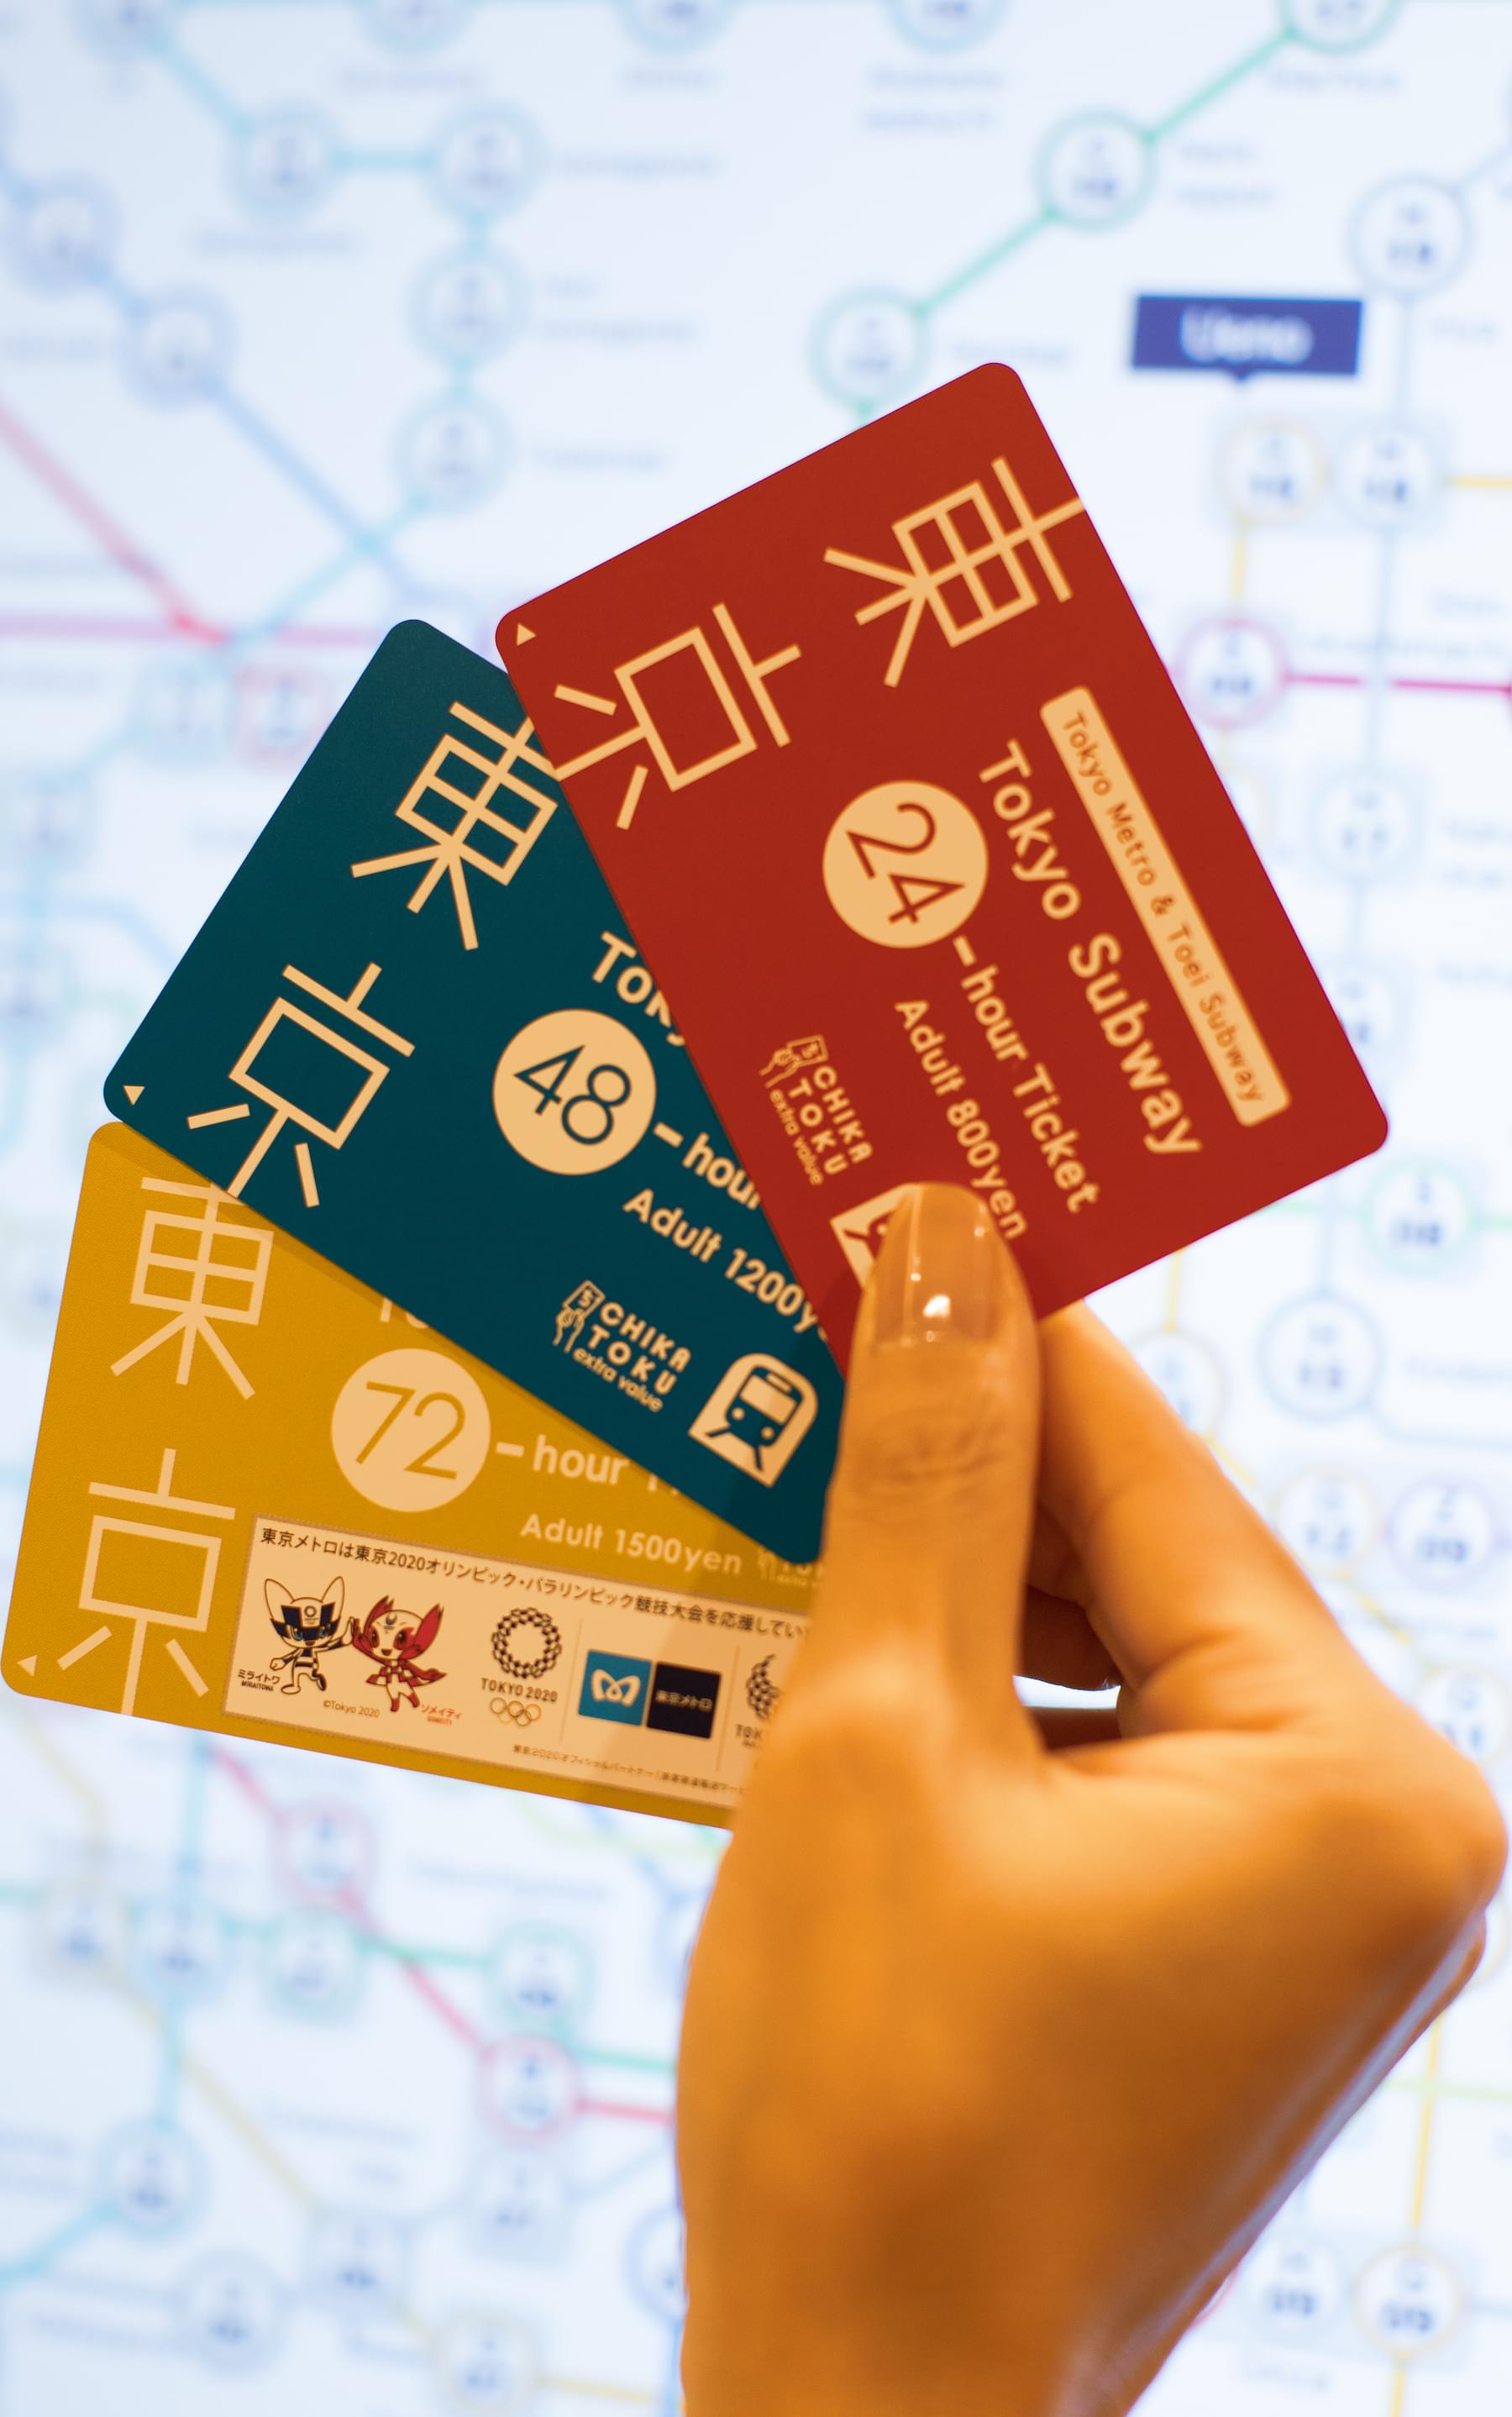 [image] Tokyo Subway Ticket